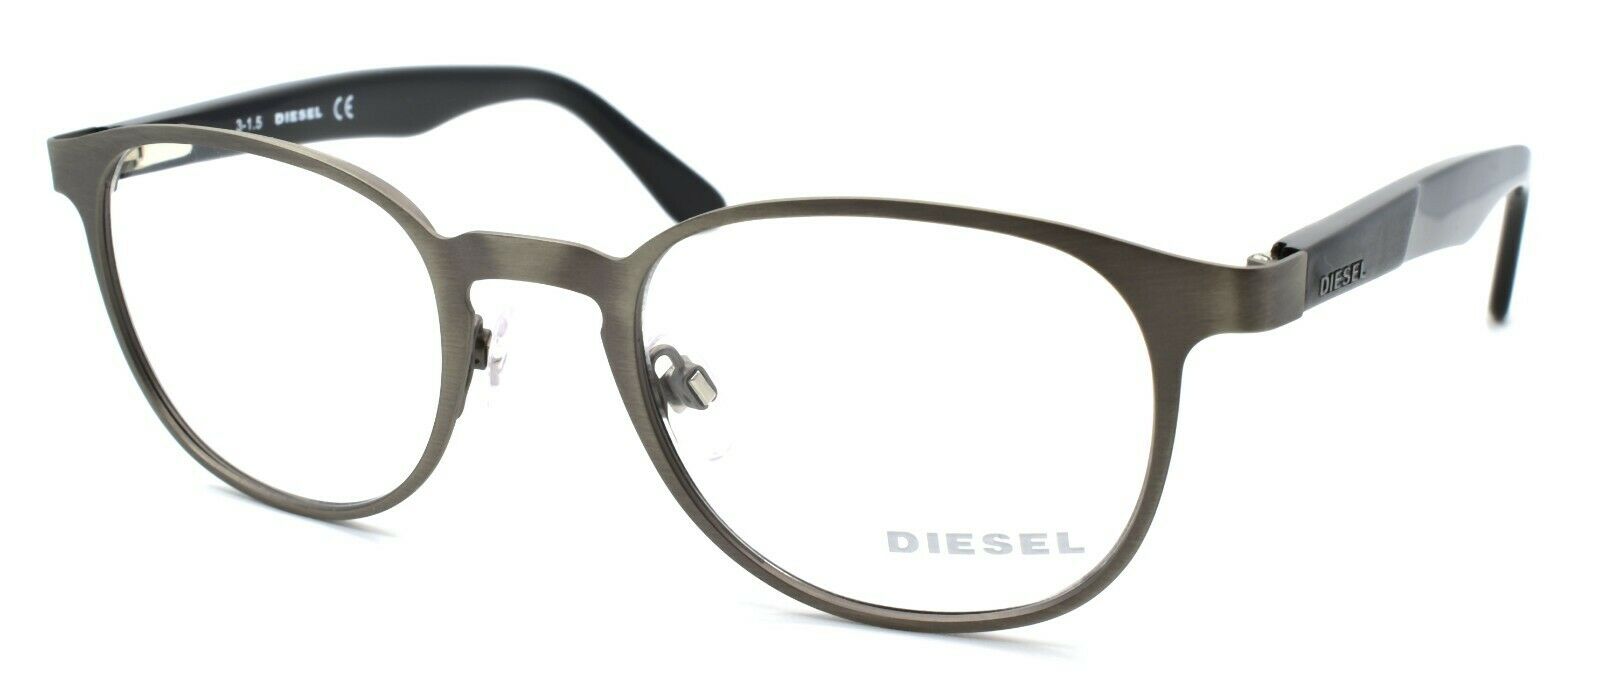 1-Diesel DL5169 009 Men's Eyeglasses Frames 49-21-145 Matte Gunmetal / Black-664689709380-IKSpecs